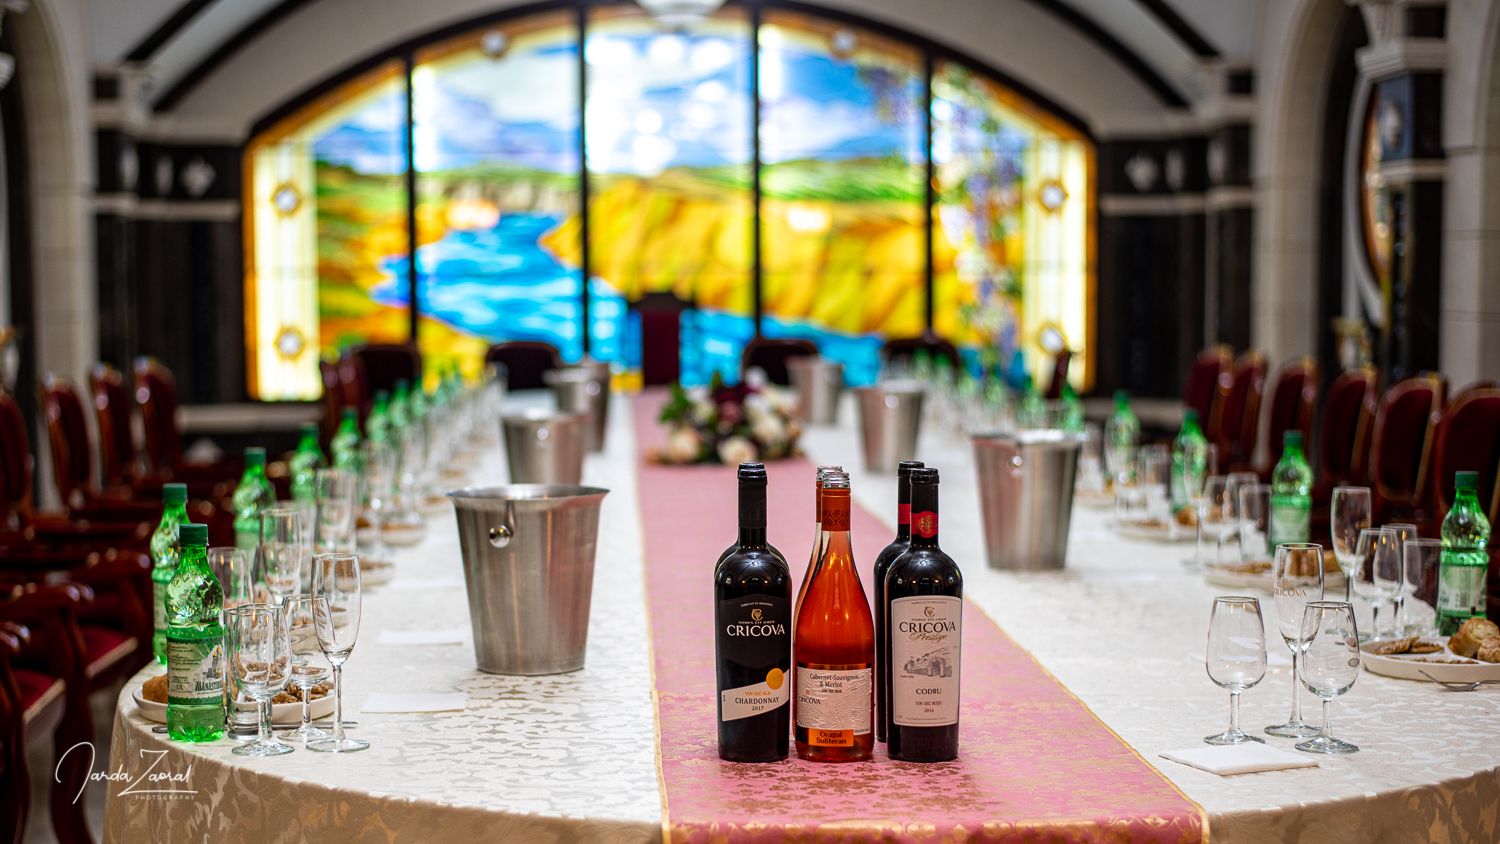 Tasting table at Cricova winery